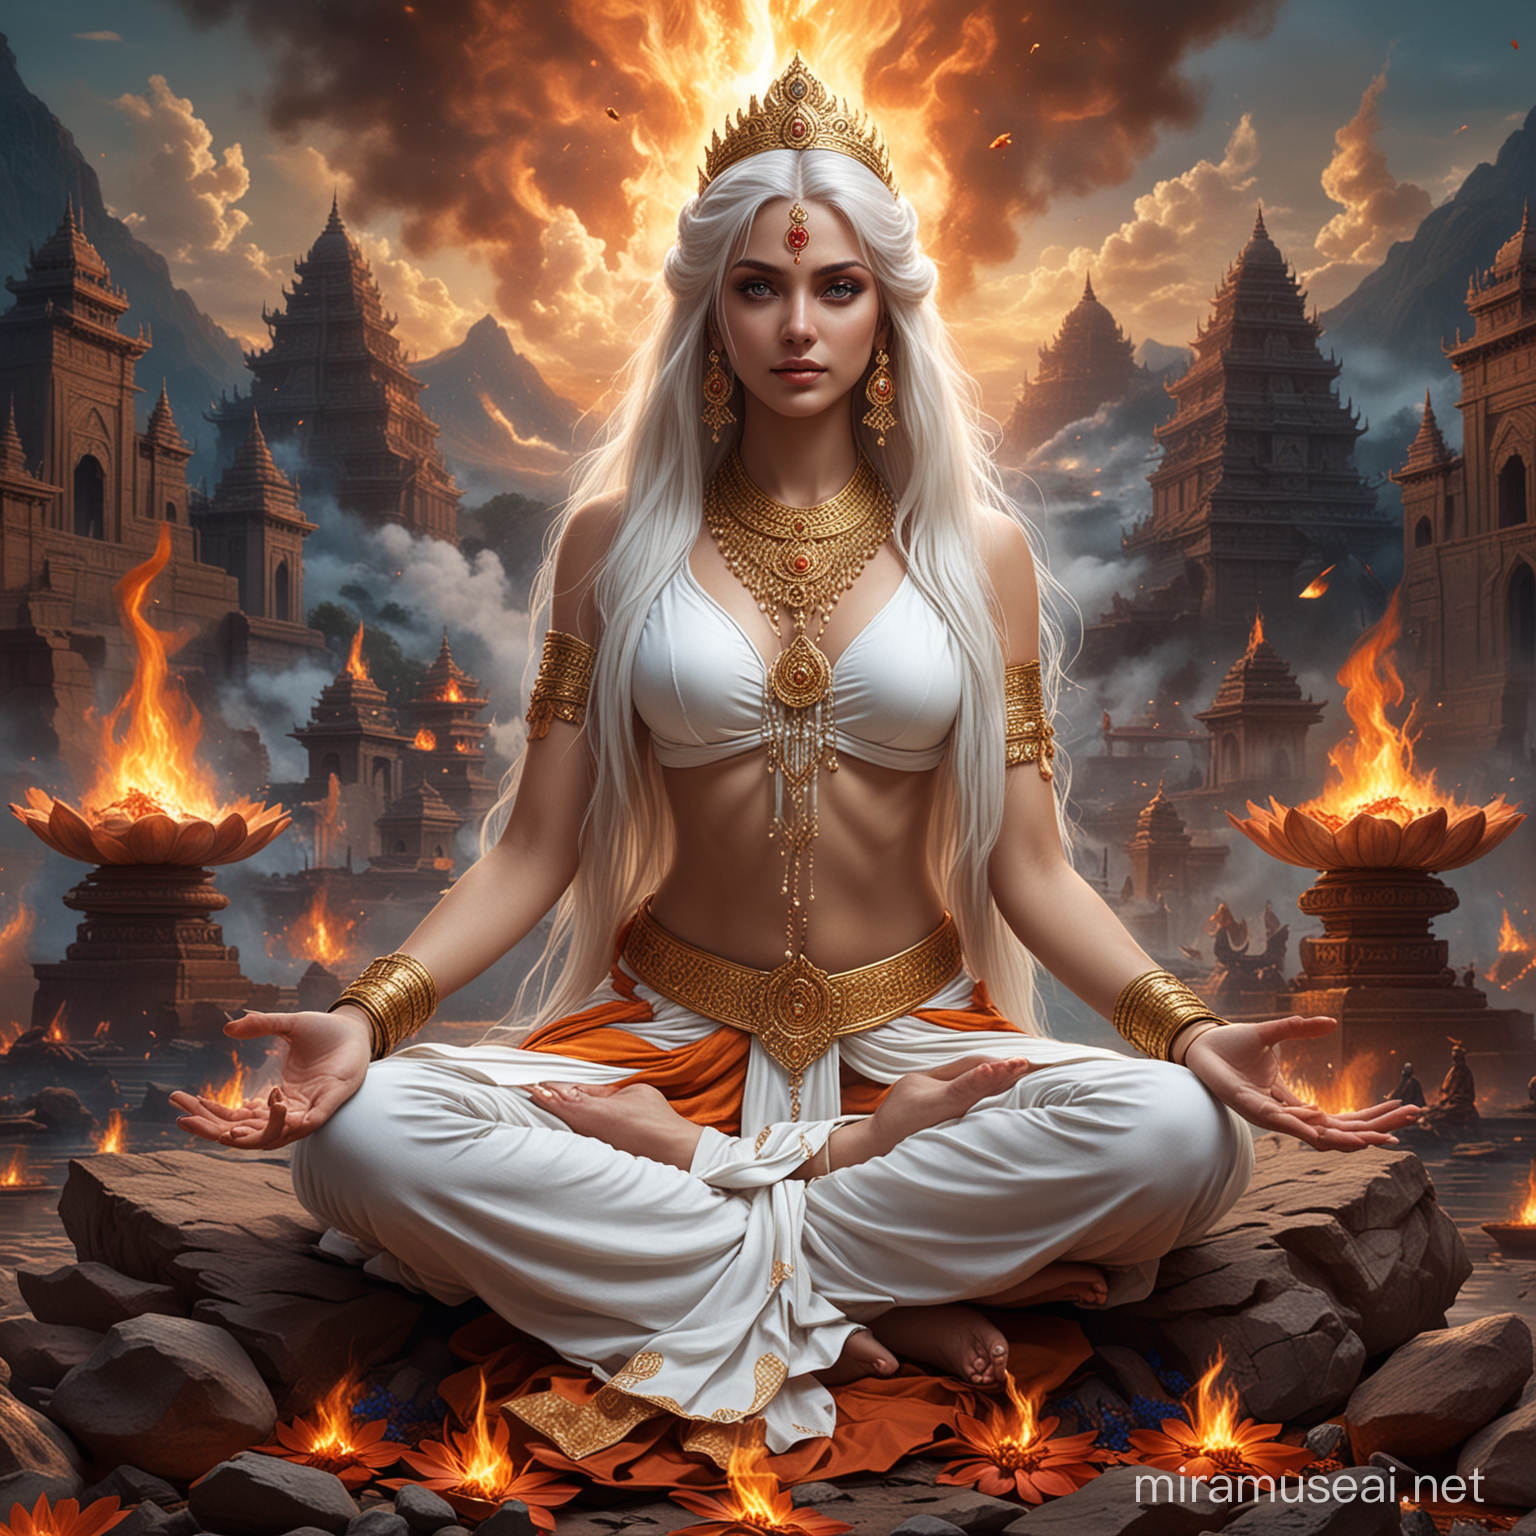 Majestic Hindu Empress Surrounded by Fiery Demonic Goddesses